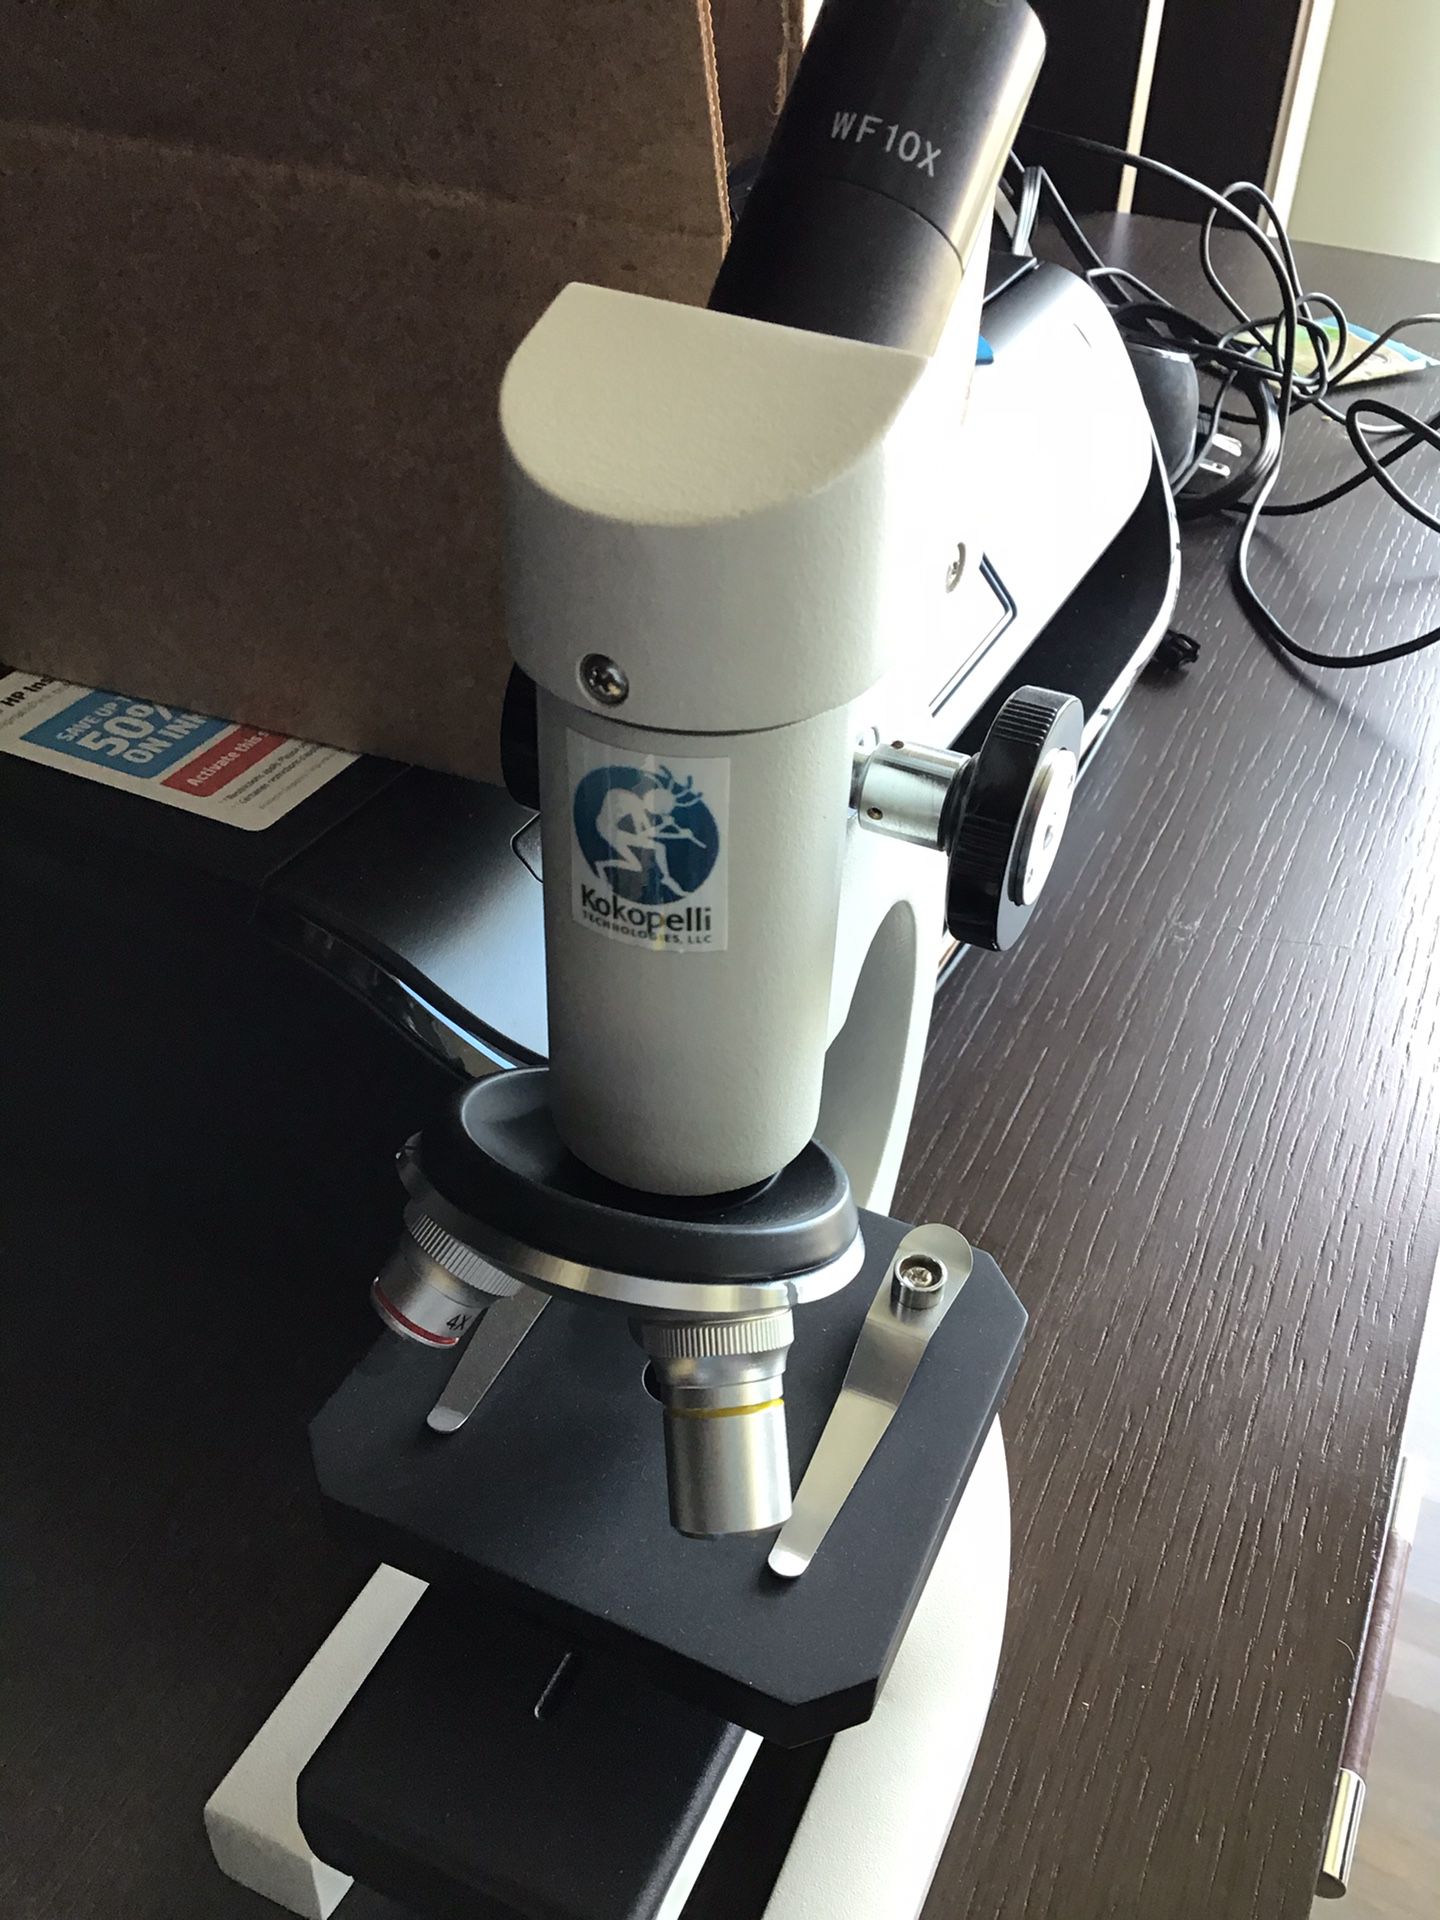 Kokopelli microscope wf10x